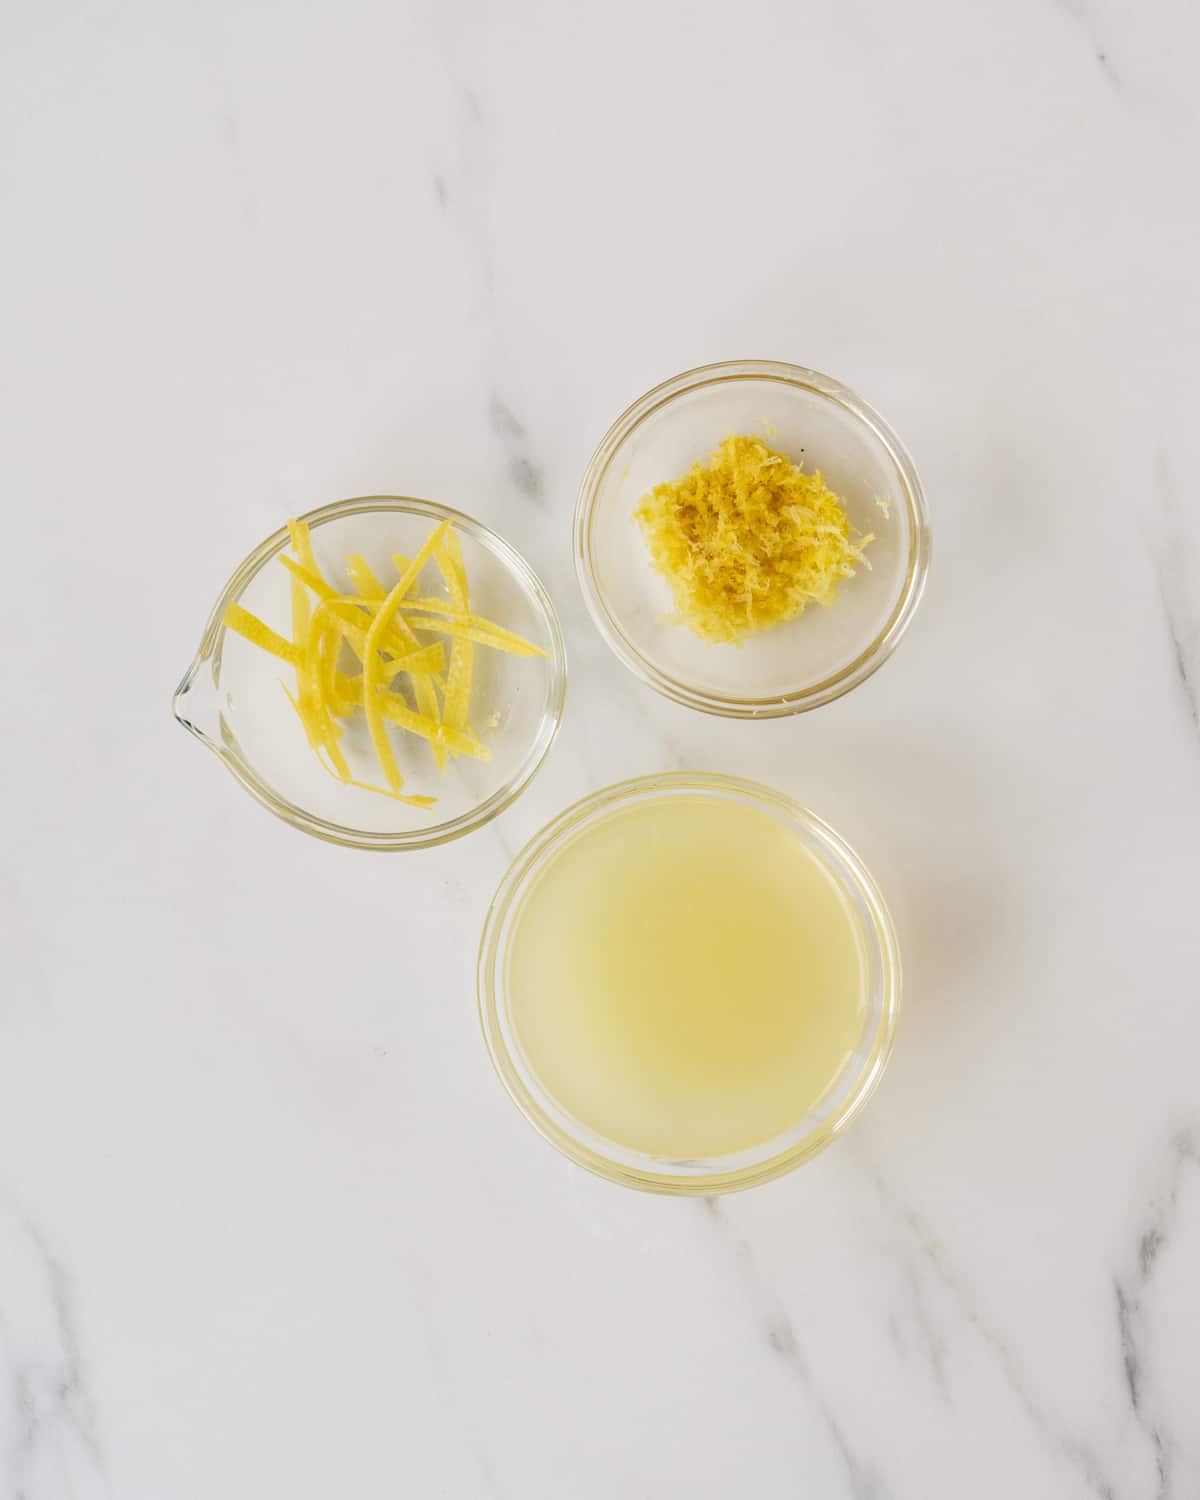 A bowl of lemon zest, a bowl of lemon peel strands, and a bowl of lemon juice.  